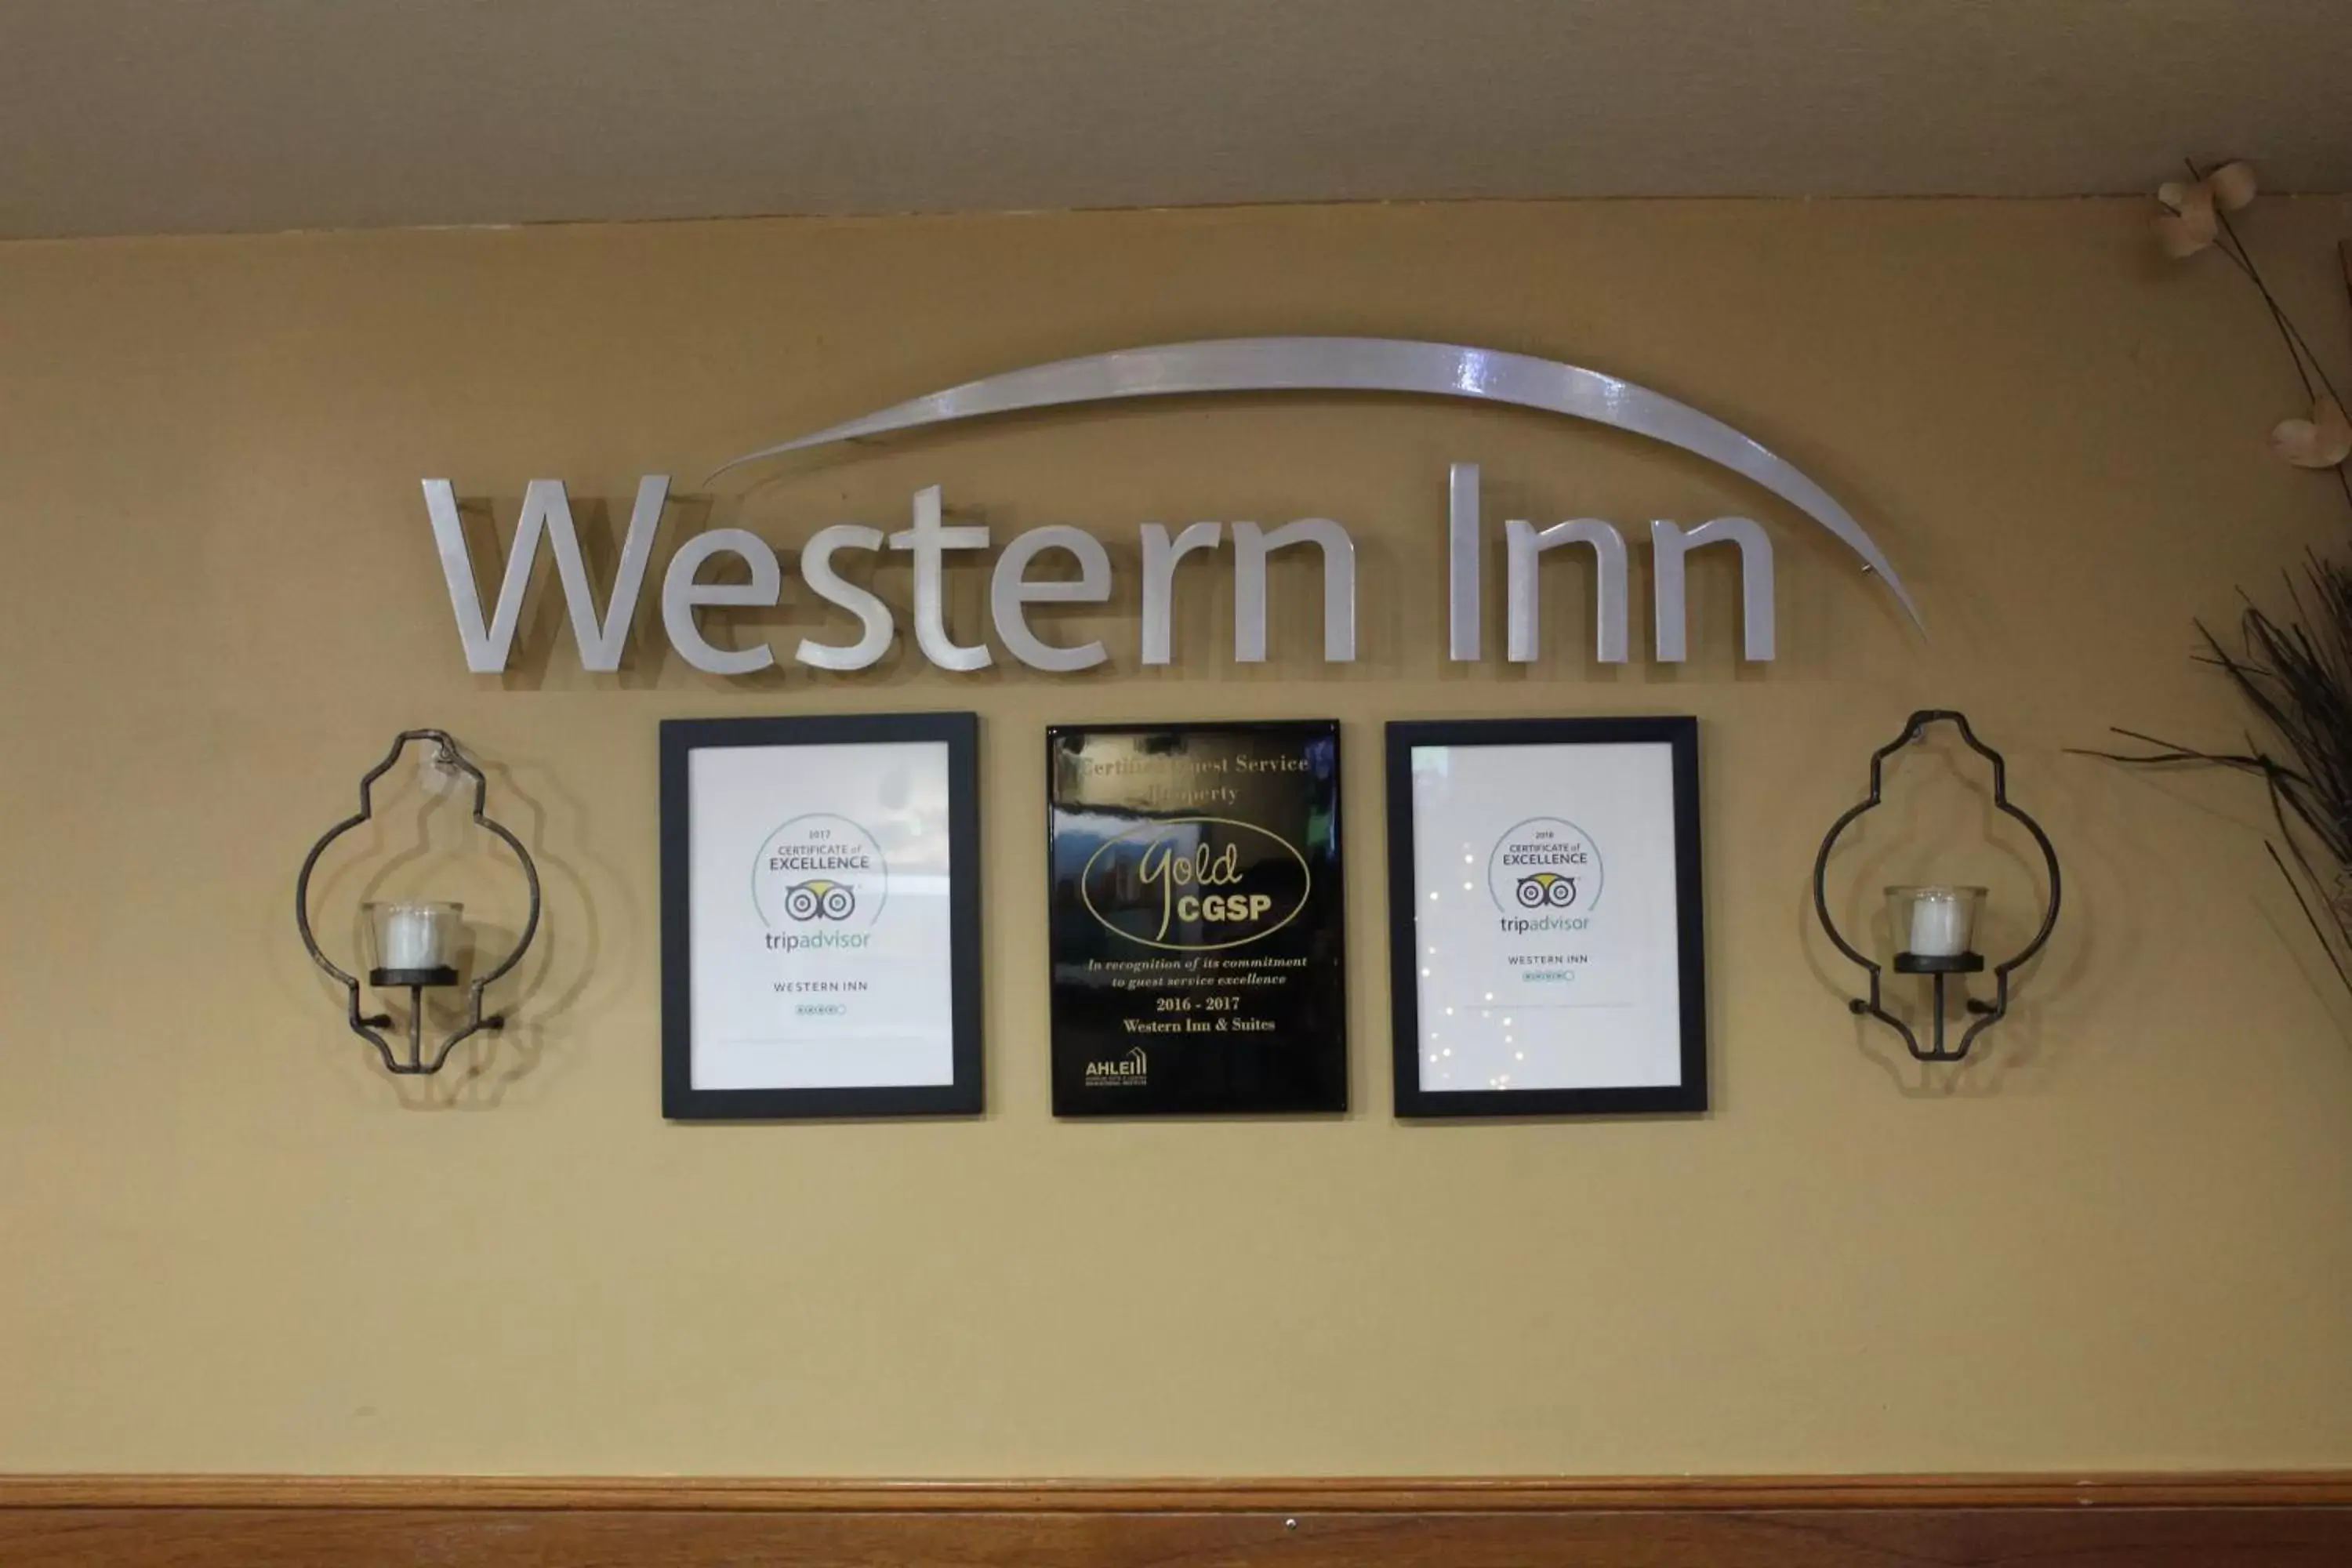 Certificate/Award in Old Town Western Inn